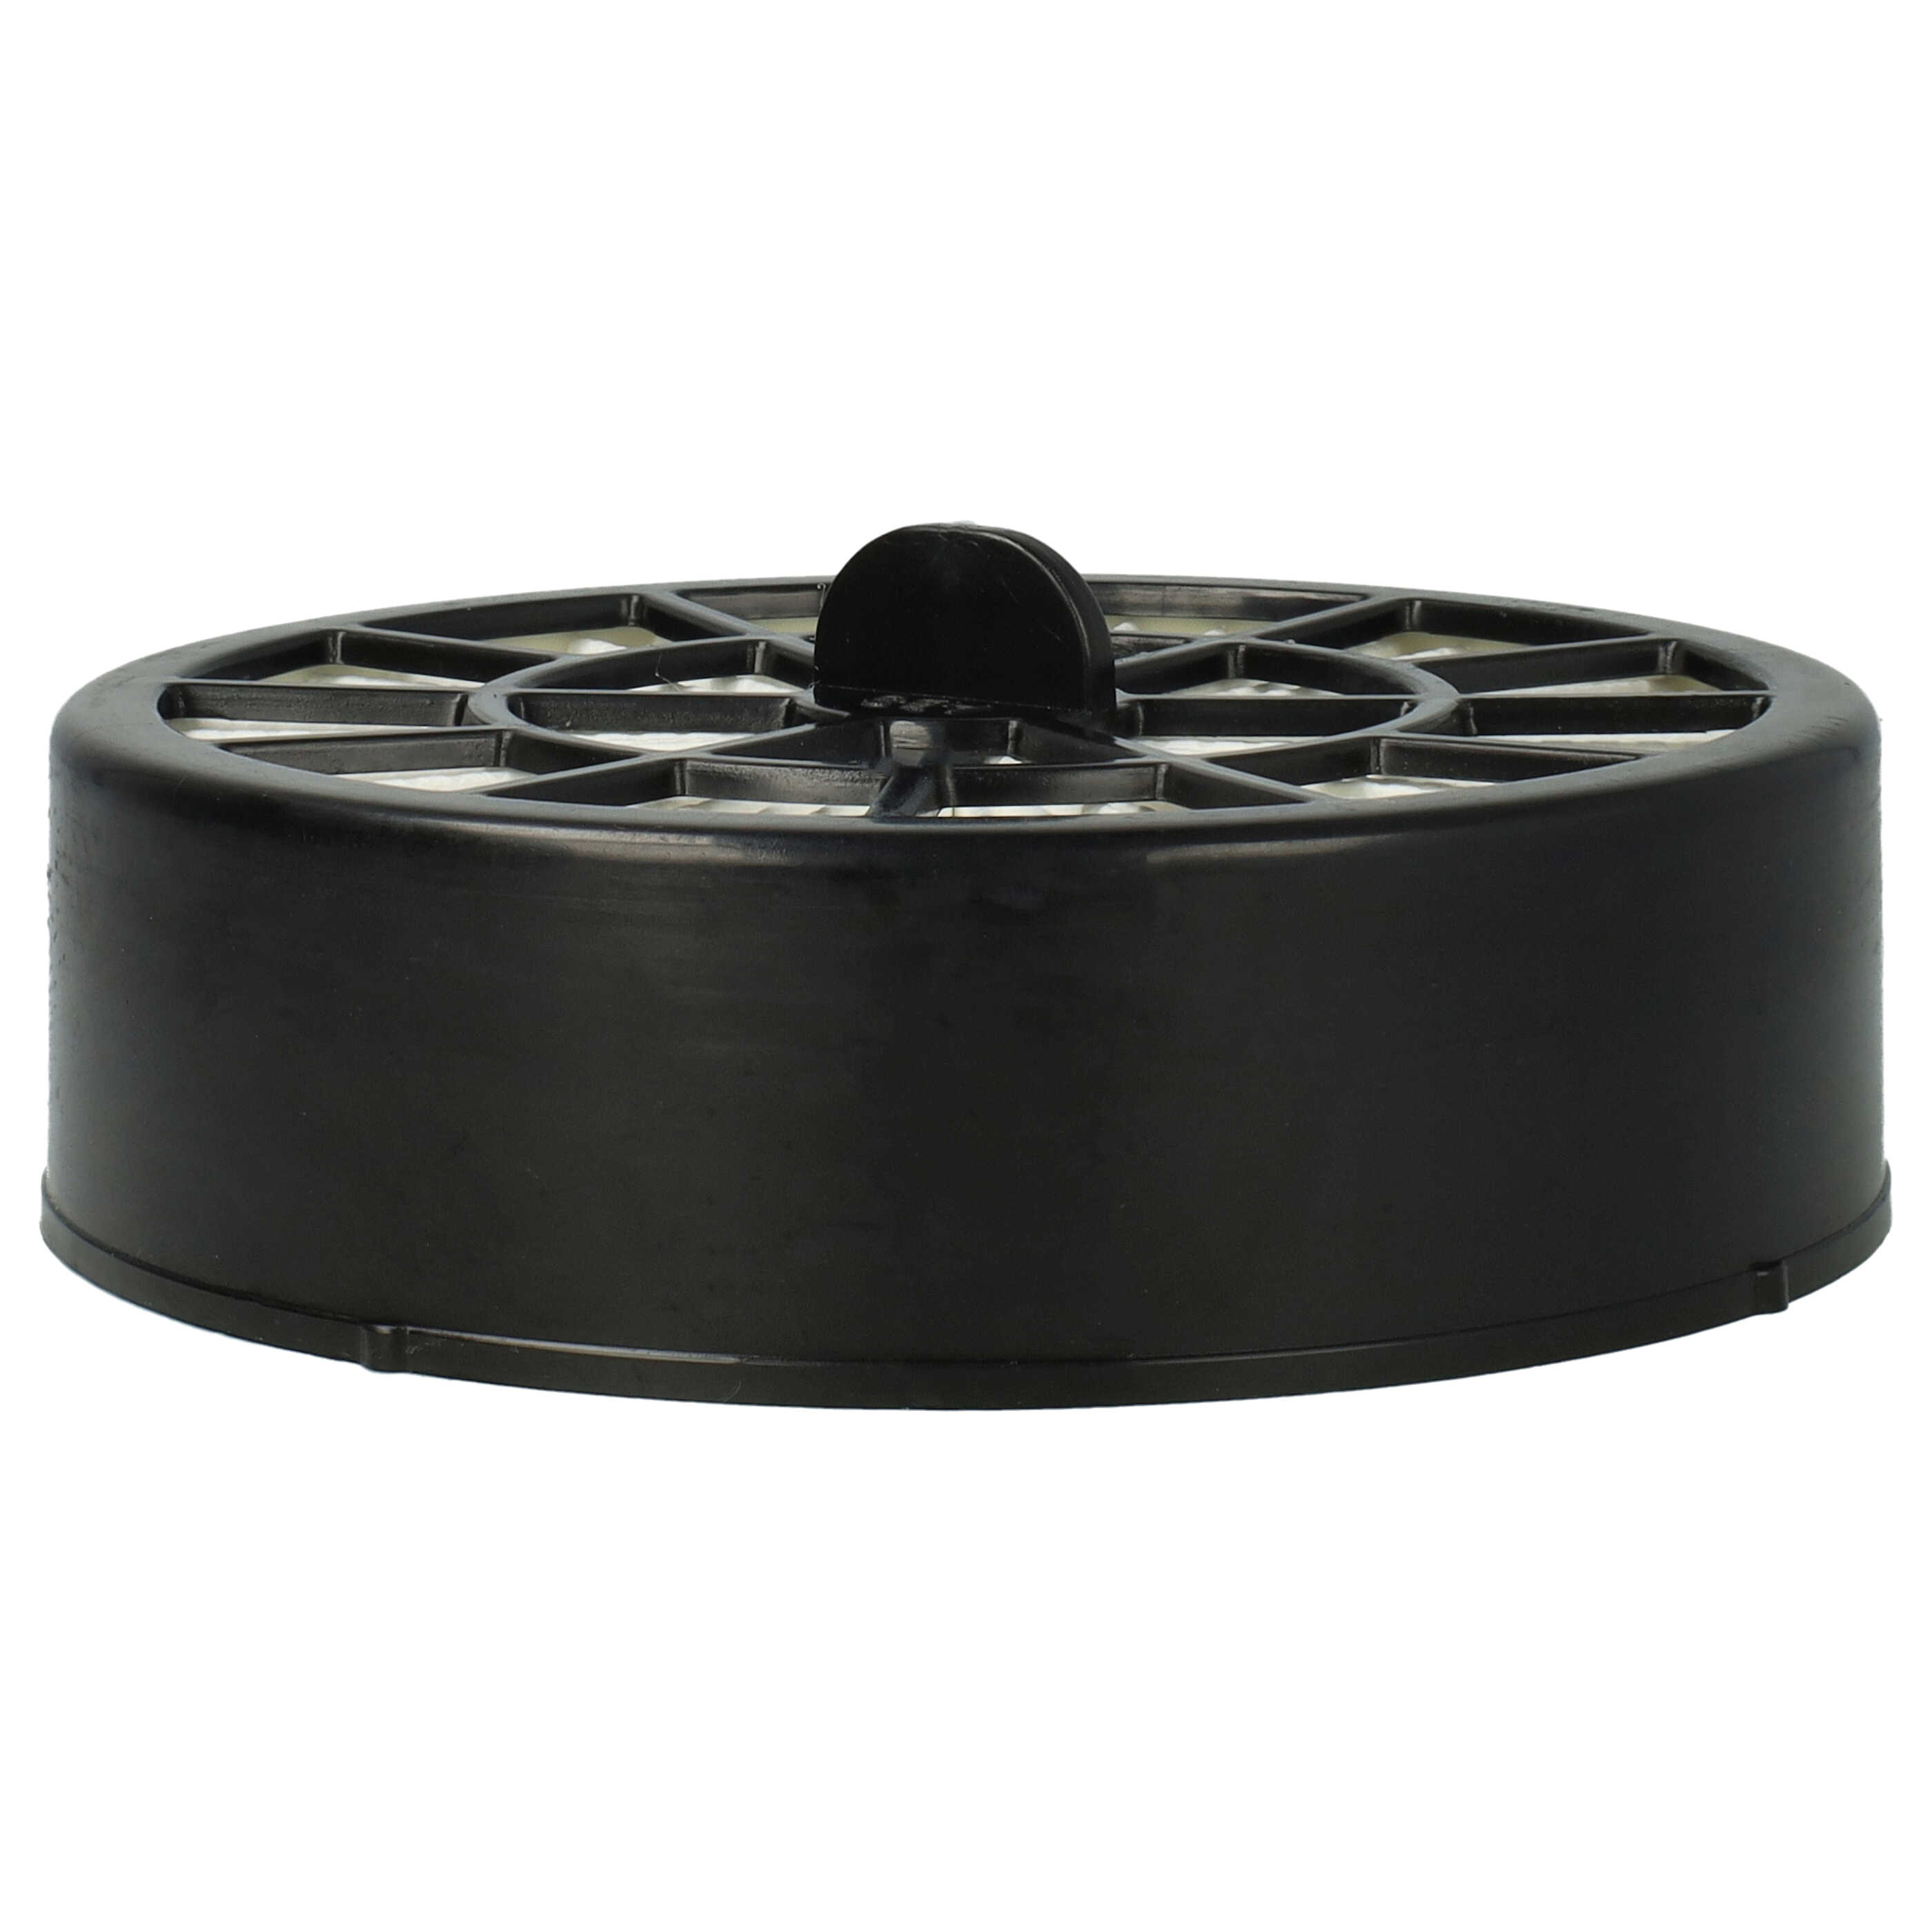 Filtro reemplaza Ariete AT5166054100 para aspiradora - filtro Hepa negro / blanco